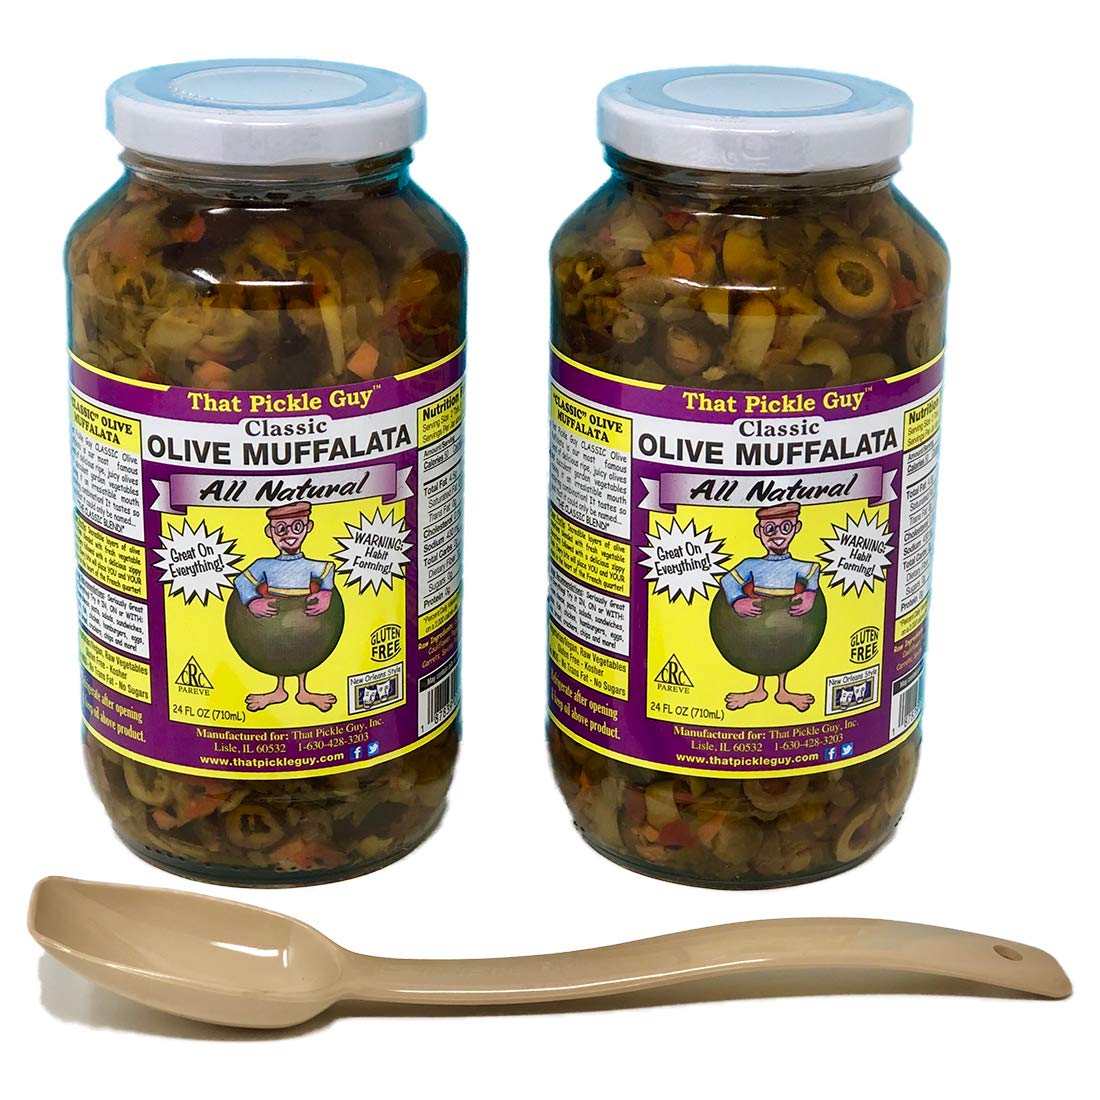 That Pickle Guy Classic Olive Muffalata Mix 32 Oz Jar